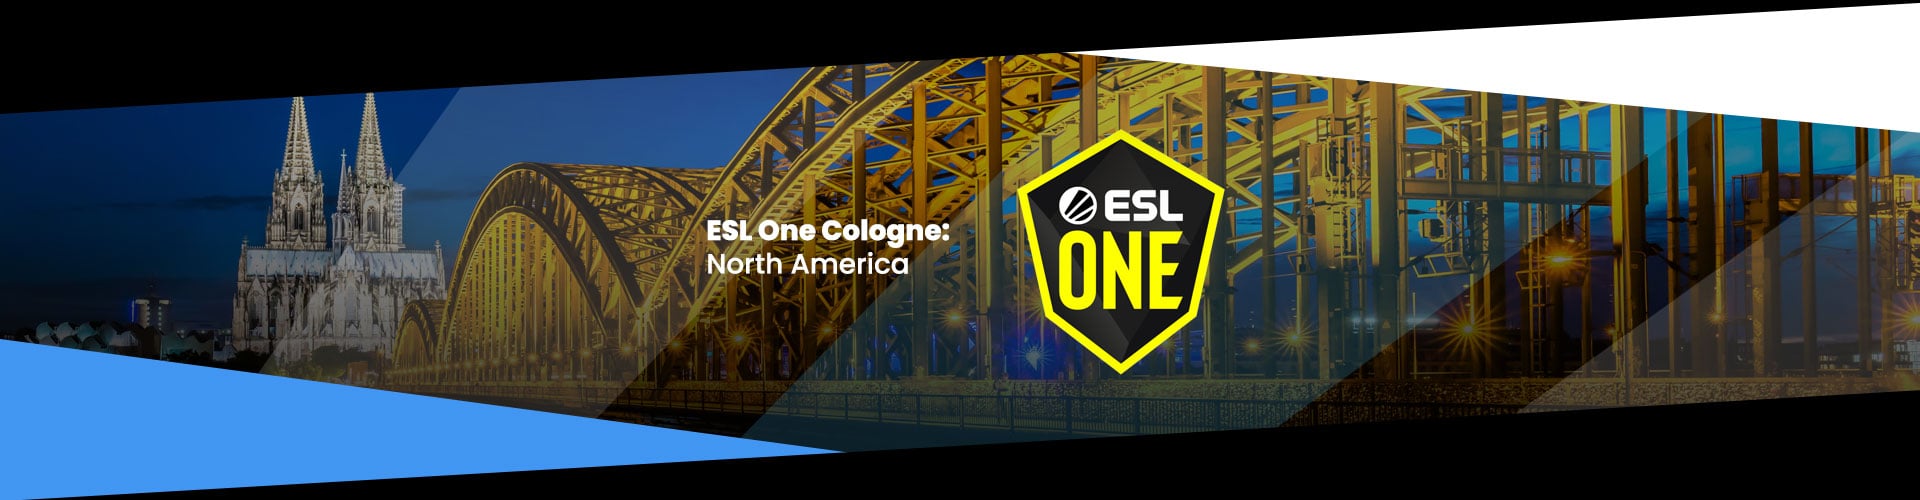 ESL One Cologne Online: North America image